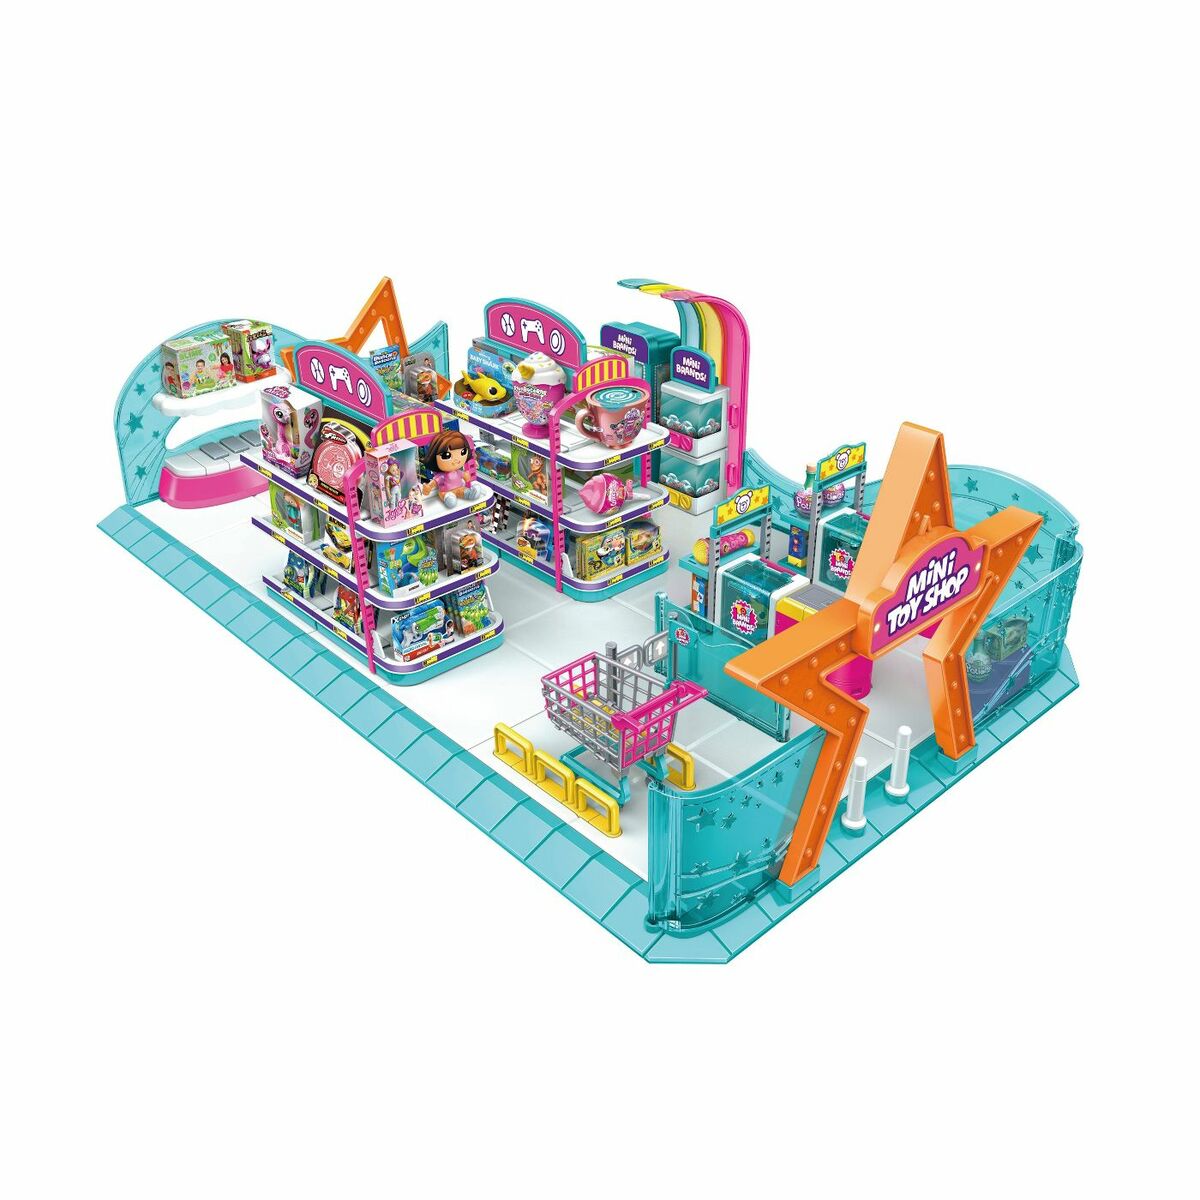 Toy Mini Brands Toyshop/Lelukauppa